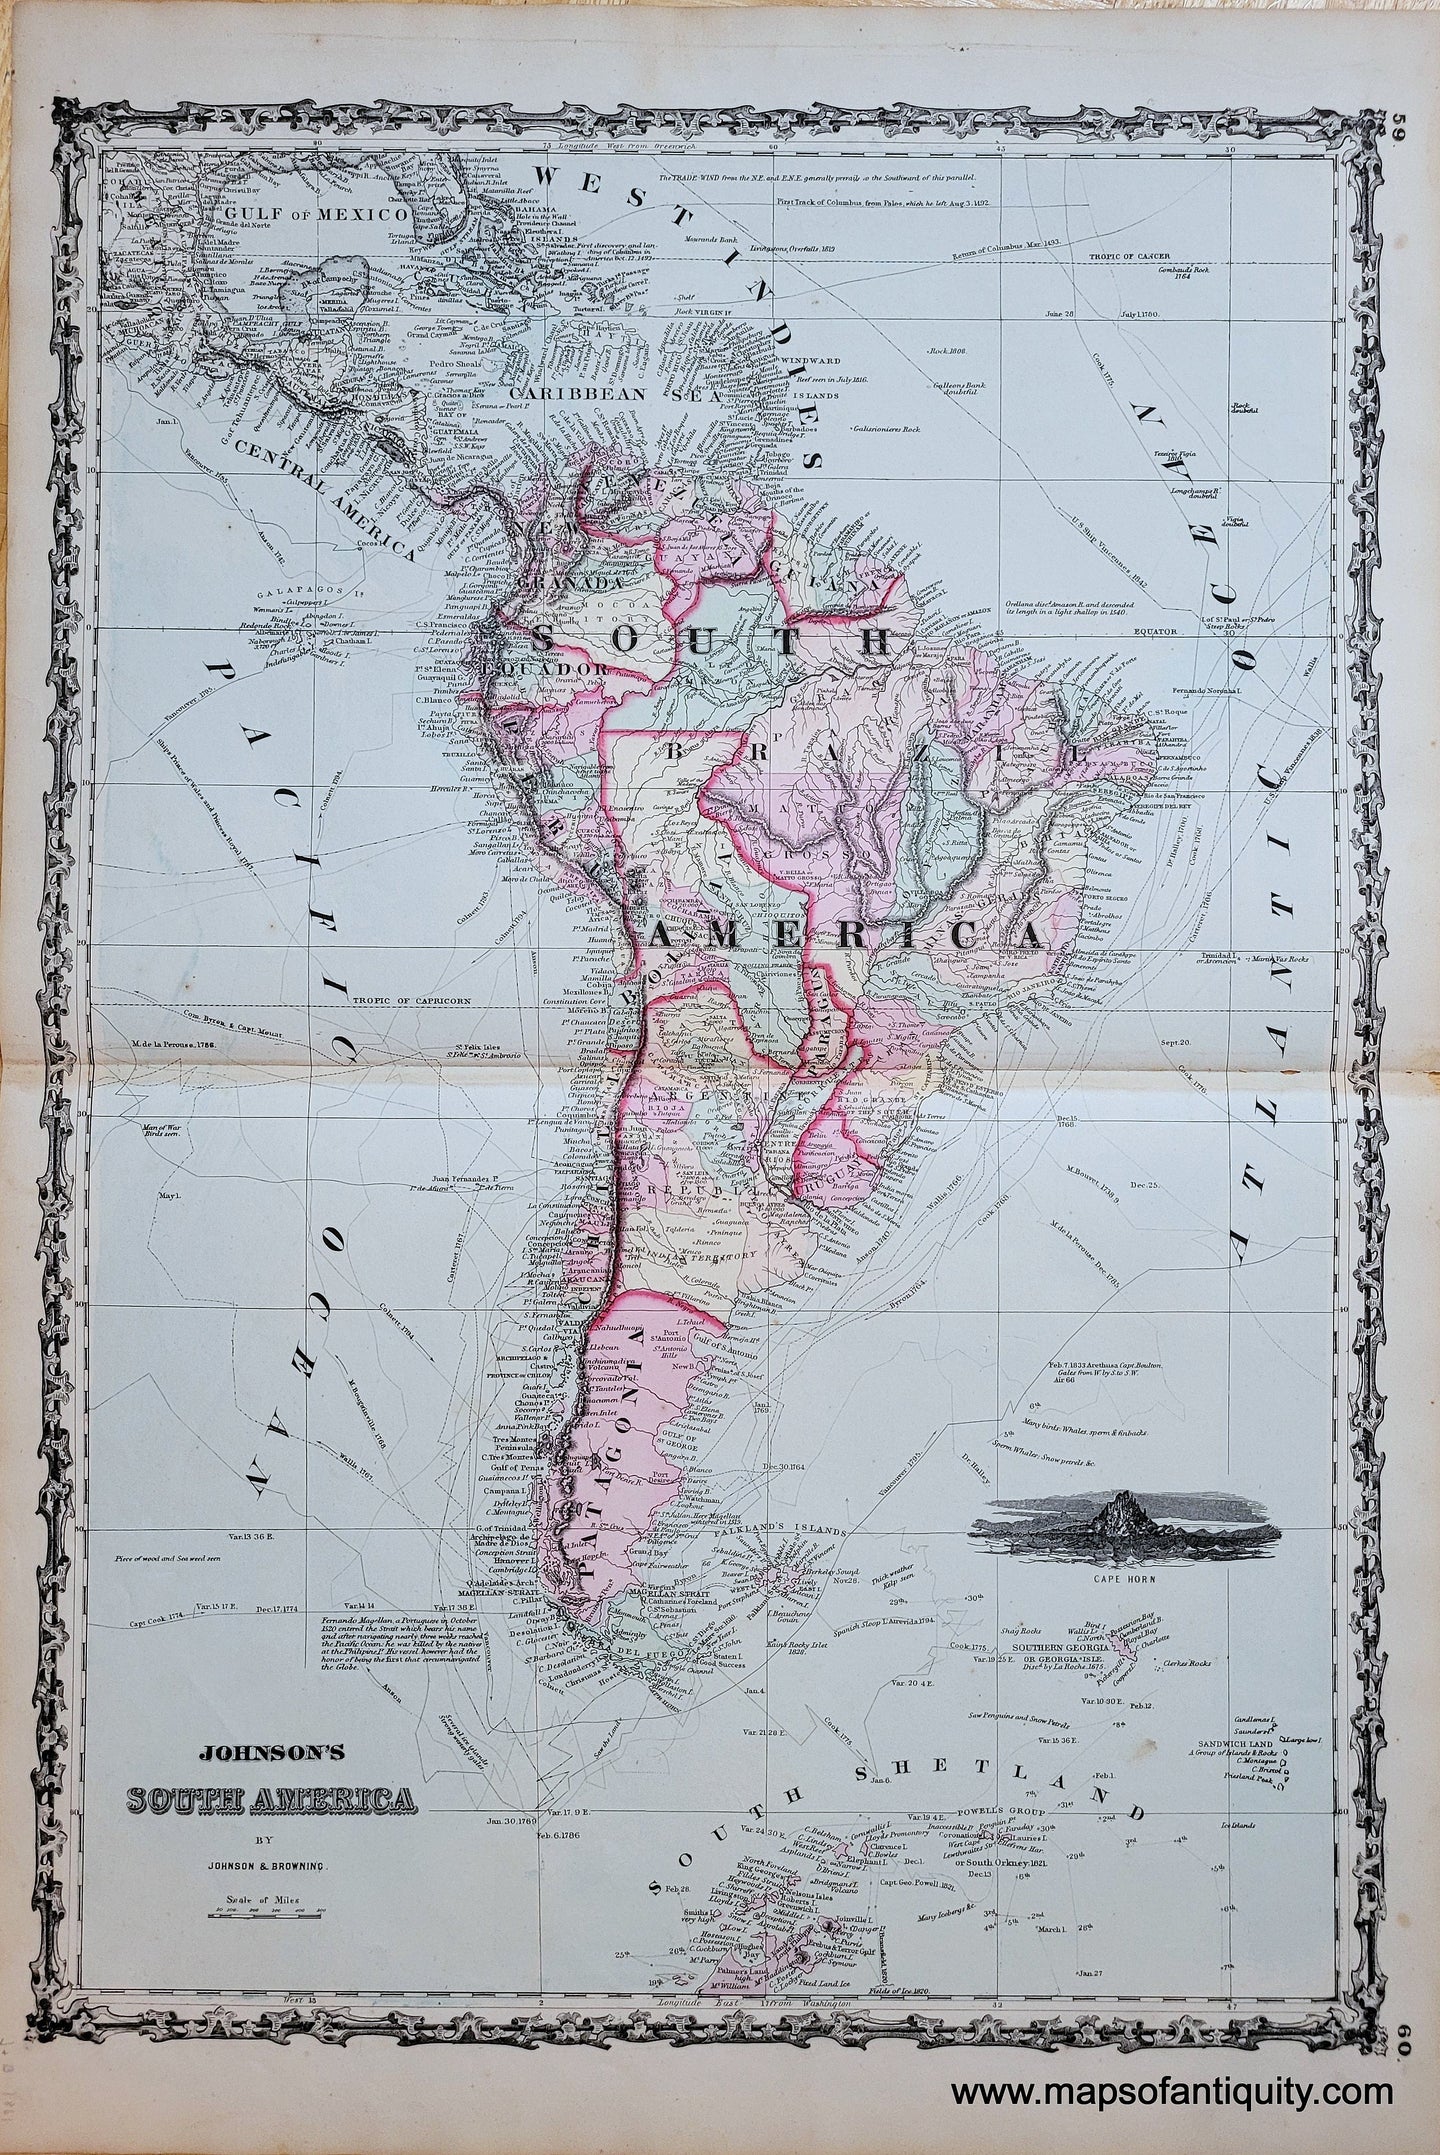 Genuine-Antique-Map-Johnsons-South-America-South-America-1861-Johnson-Browning-Maps-Of-Antiquity-1800s-19th-century